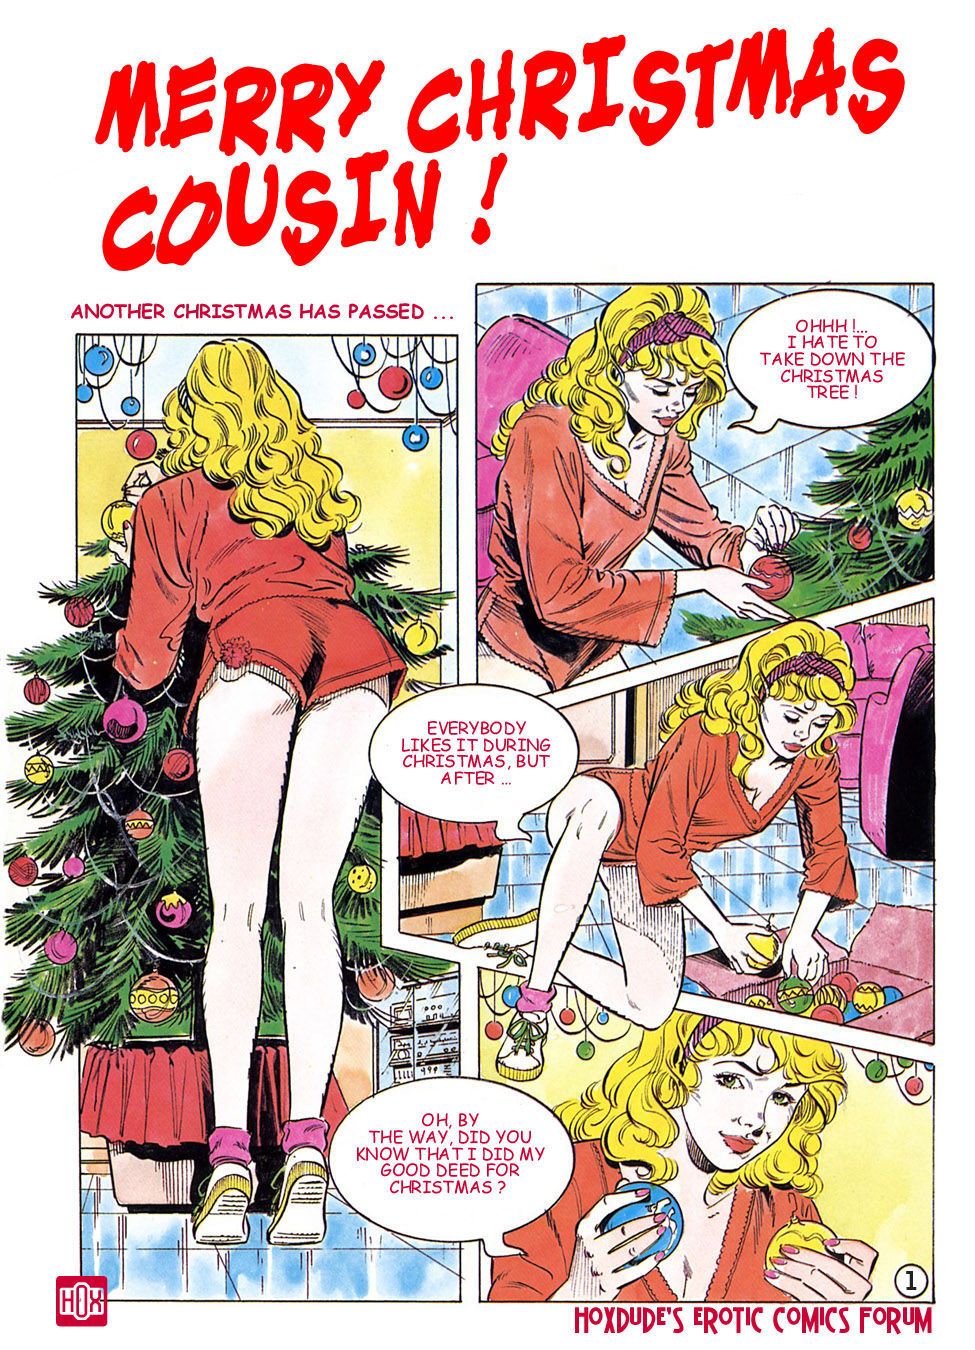 dino leonetti Merry Noel cousin! {loops}